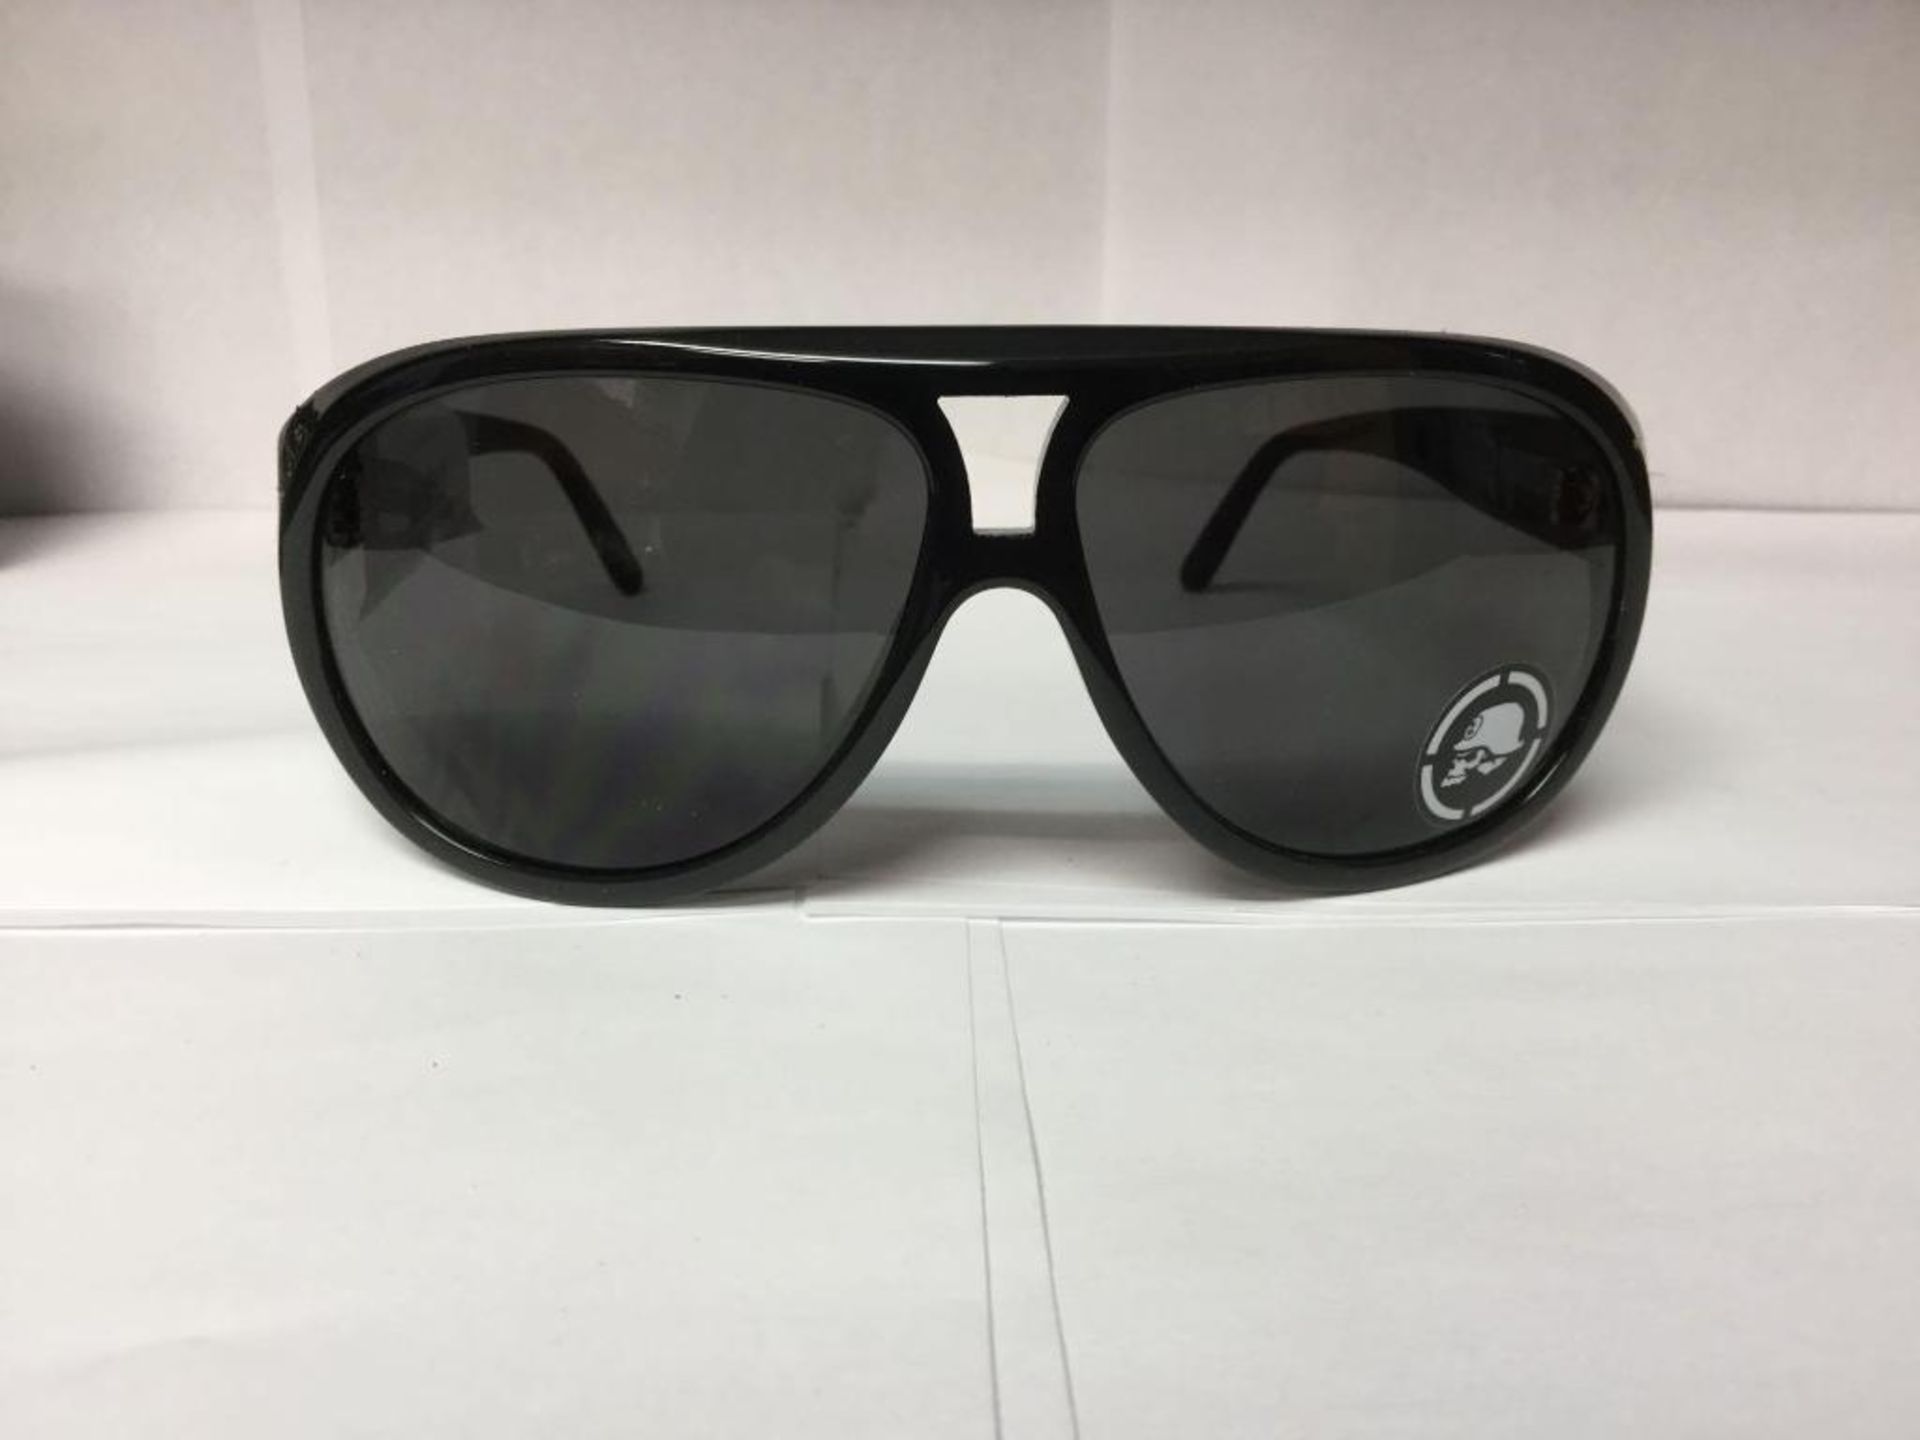 Metal Mulisha Sunglasses with box - Value $ 155 - Image 3 of 3